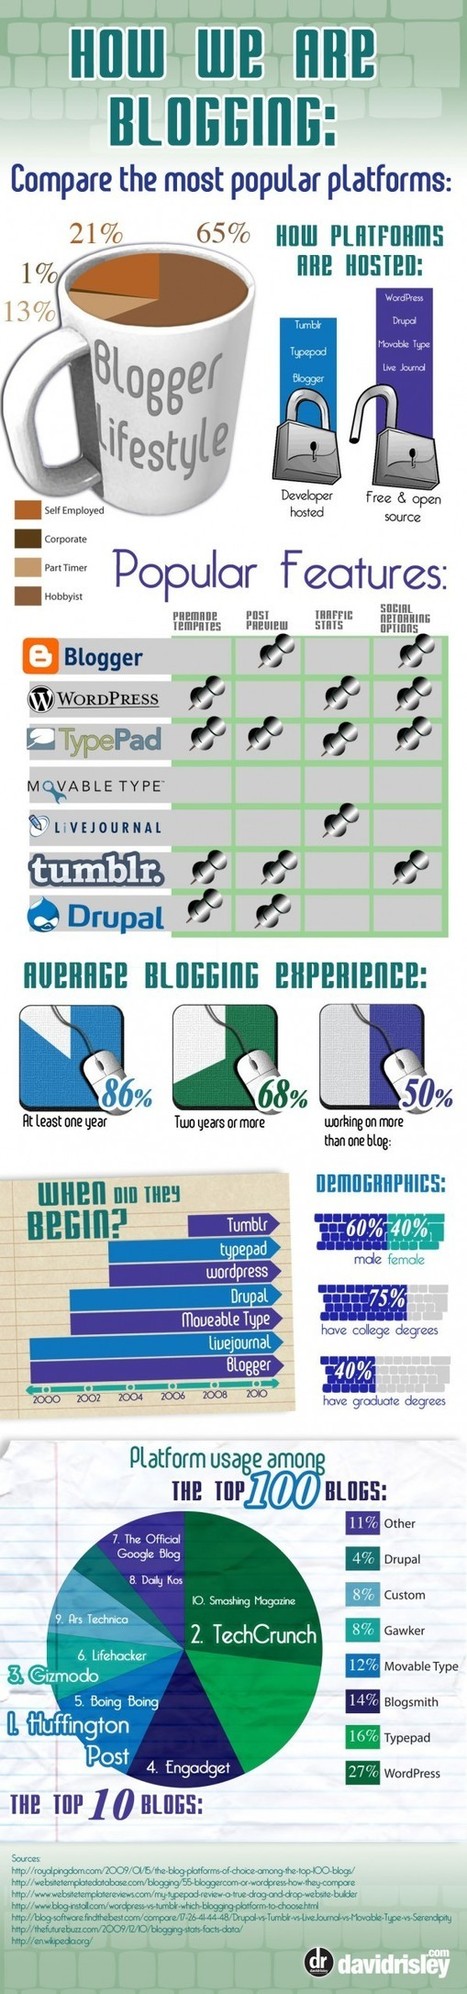 Most Popular Blogging Platforms and Top Blogs Compared [Infographic] | All Infographics | All Infographics | Scoop.it